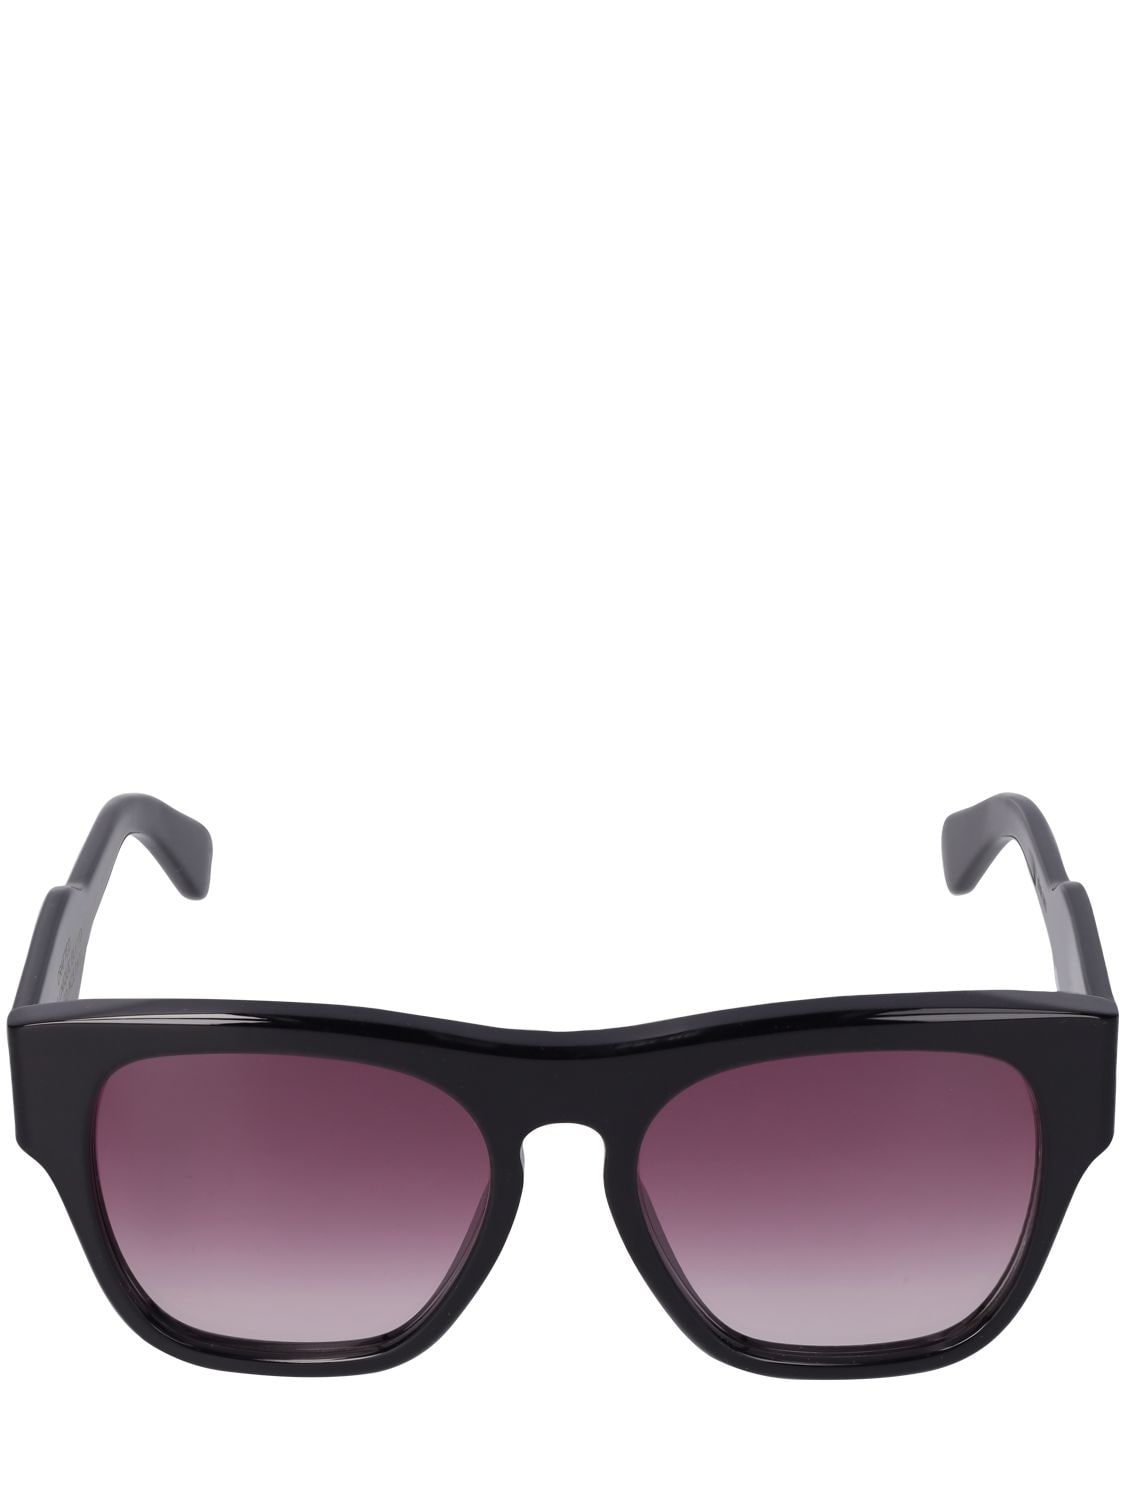 Image of Reace Squared Bio-acetate Sunglasses